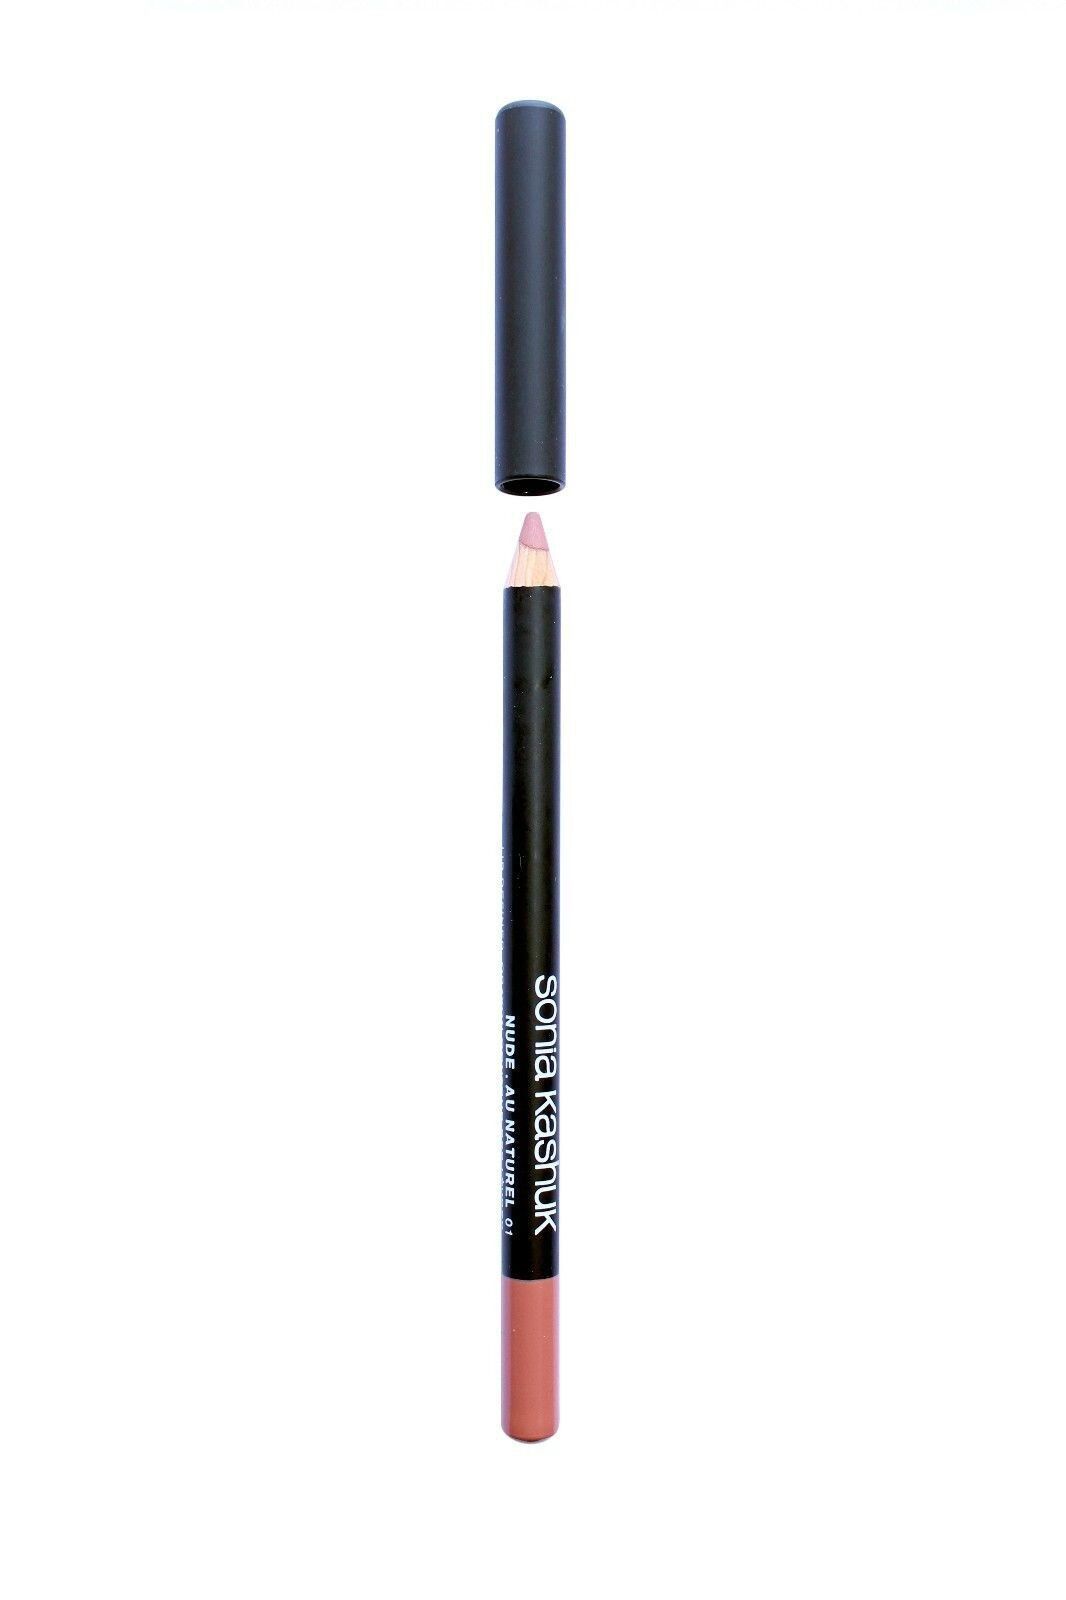 Sonia Kashuk Lip Definer Nude 01 Crayon Liner Pencil Makeup Fashion Beauty -
... - $8.69